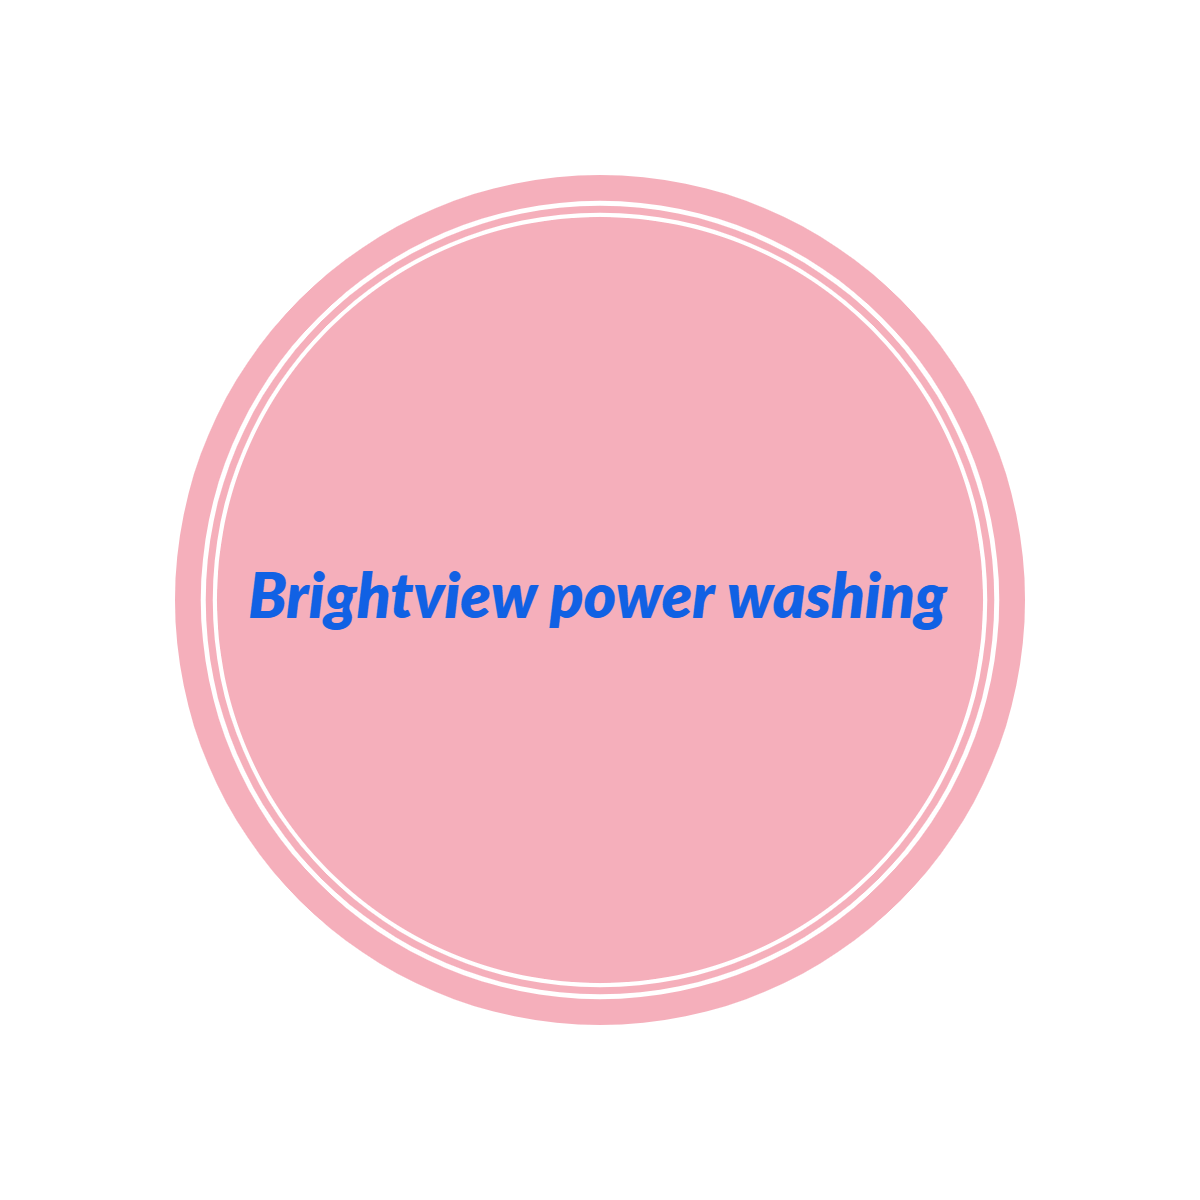 Brightview Power washing